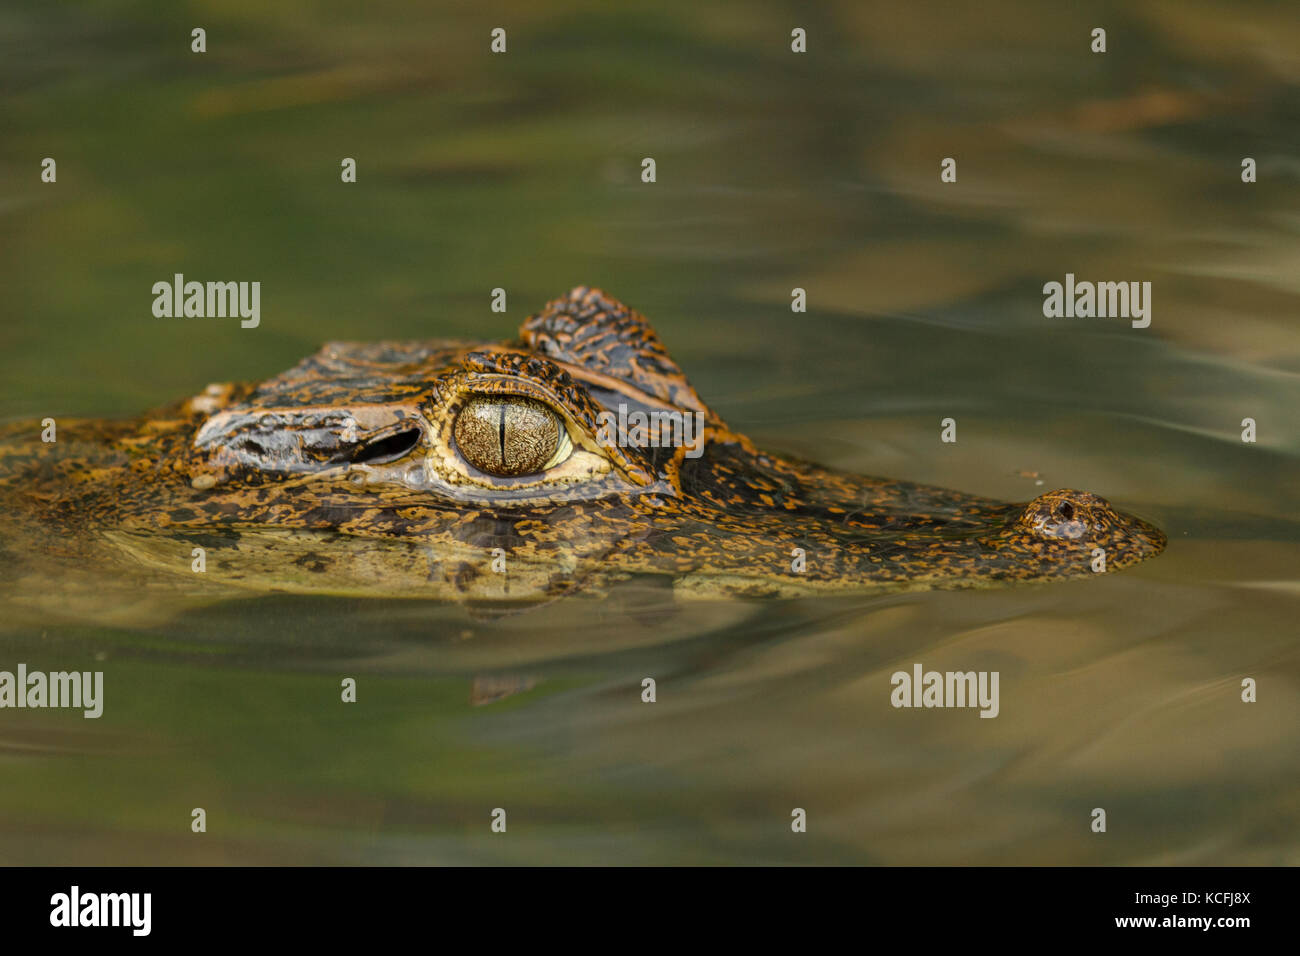 Brillenbär, Caiman crocodilus Caiman, Mittelamerika, Costa Rica, Reptilien Stockfoto